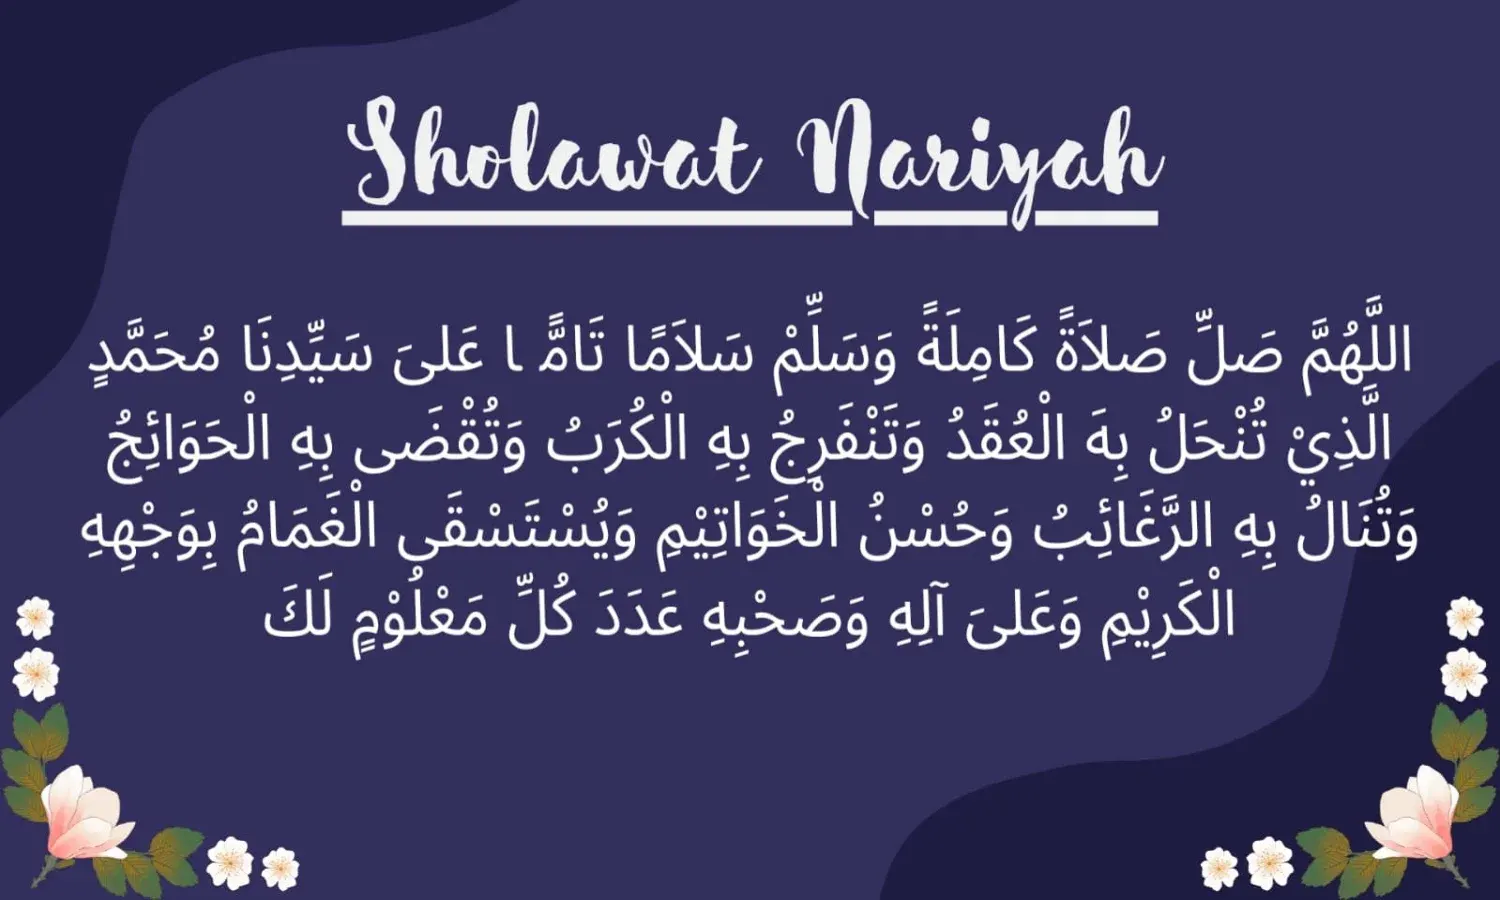 Sholawat Nariyah Lengkap Arab Latin Arti Waktu Mengamalkan Dan Keutamaanya Parboaboa